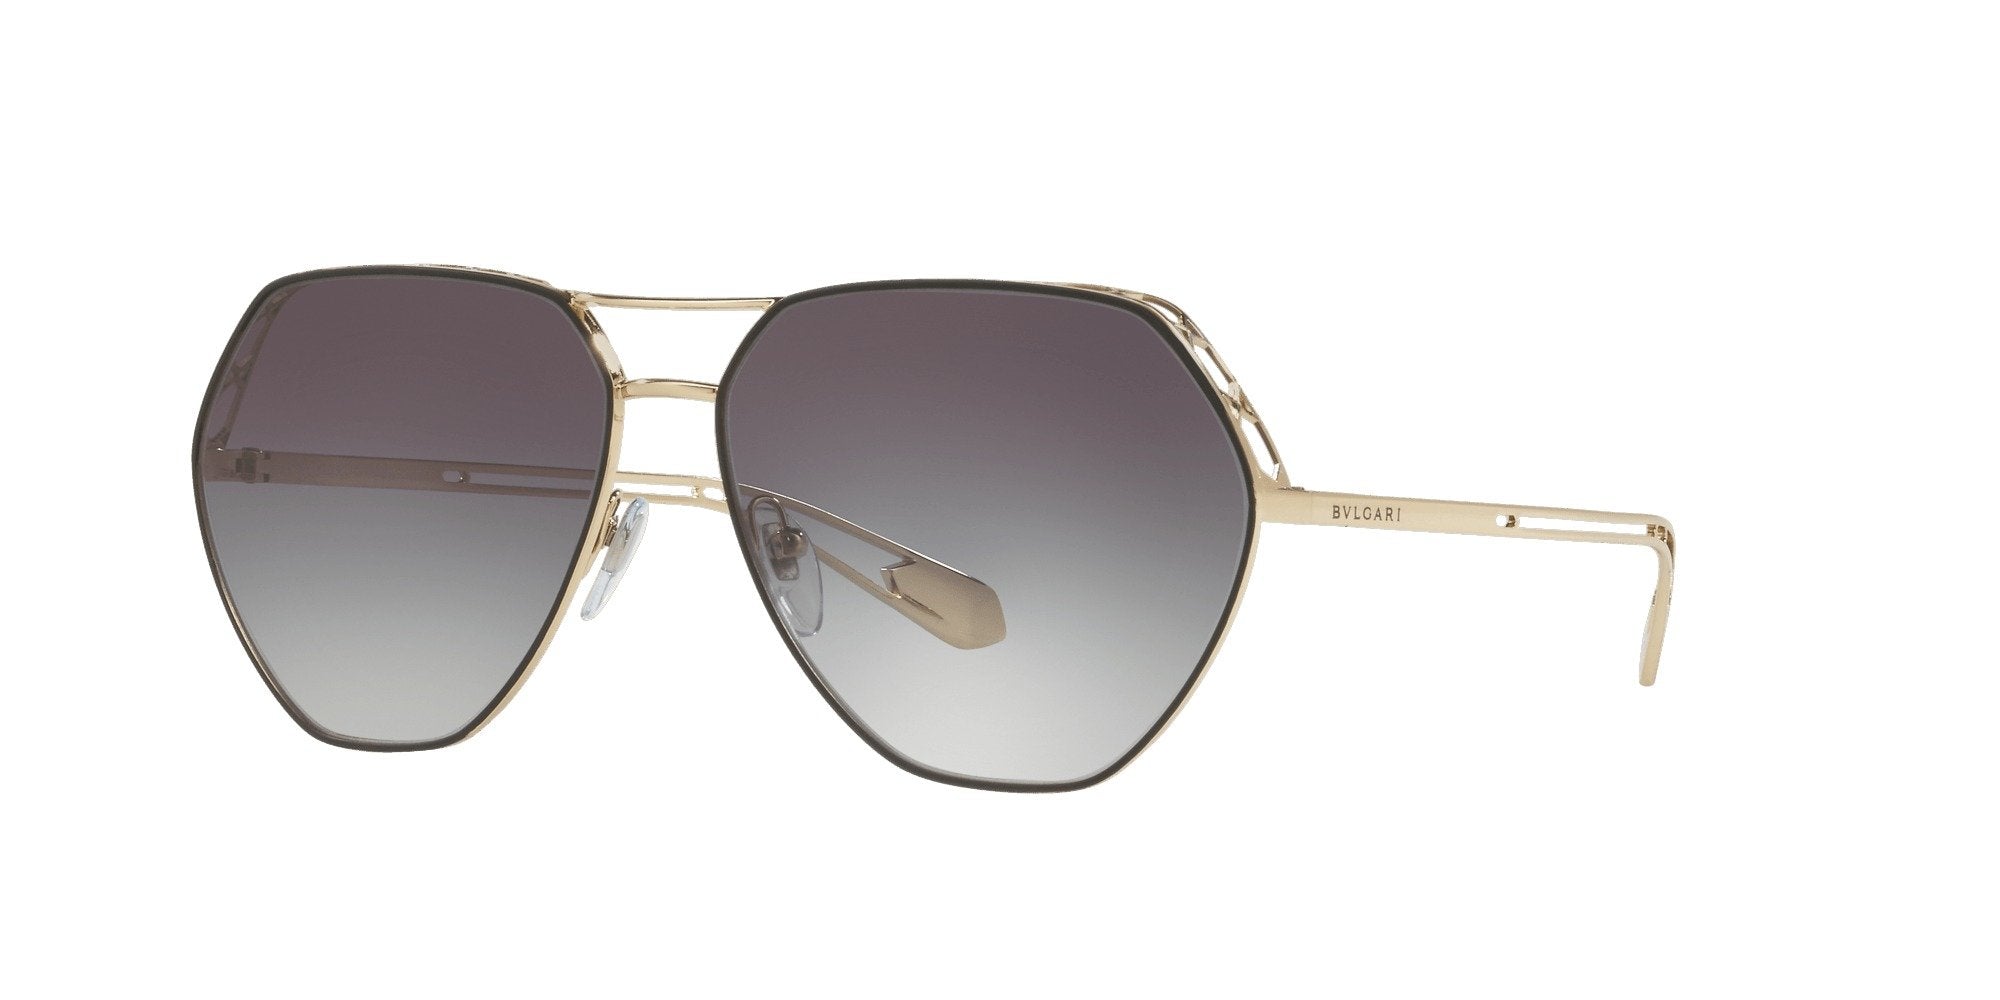 Bvlgari BV5050 57 Grey & Matte Gunmetal Sunglasses | Sunglass Hut USA |  Sunglasses, Sunglass hut, Bvlgari